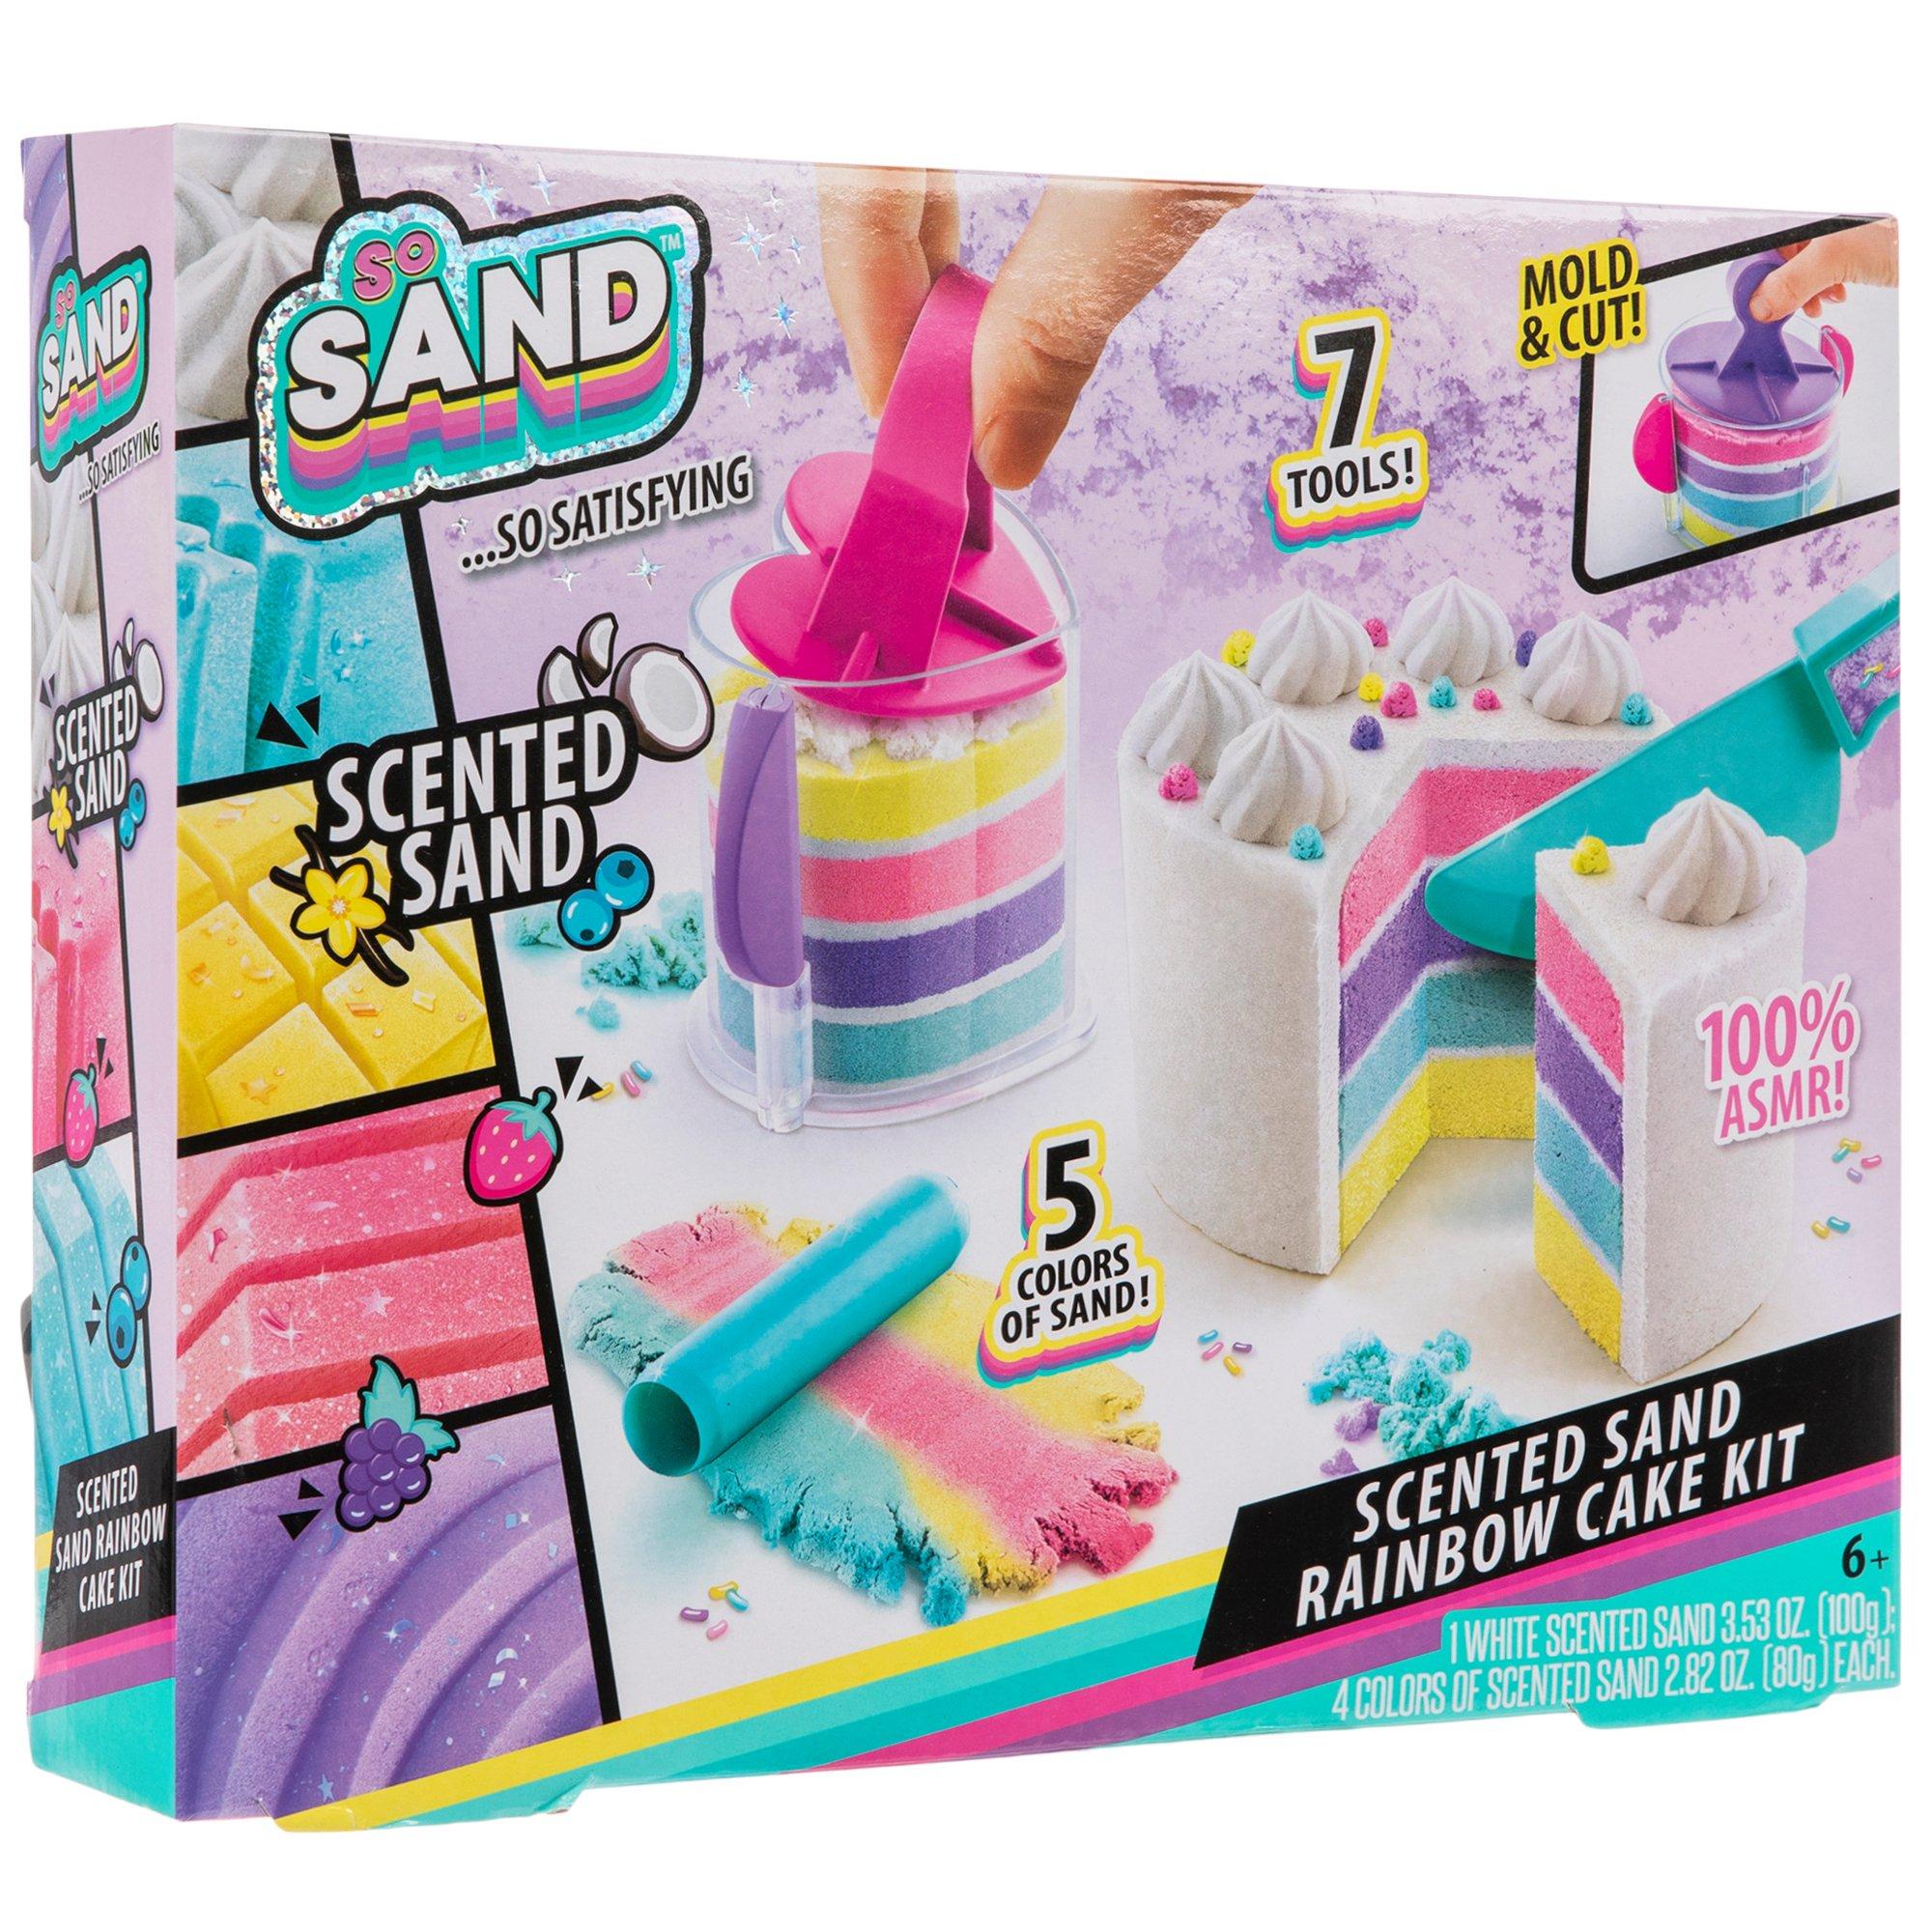 Jeu créatif so sand rainbow cake CTSDD033 - Conforama